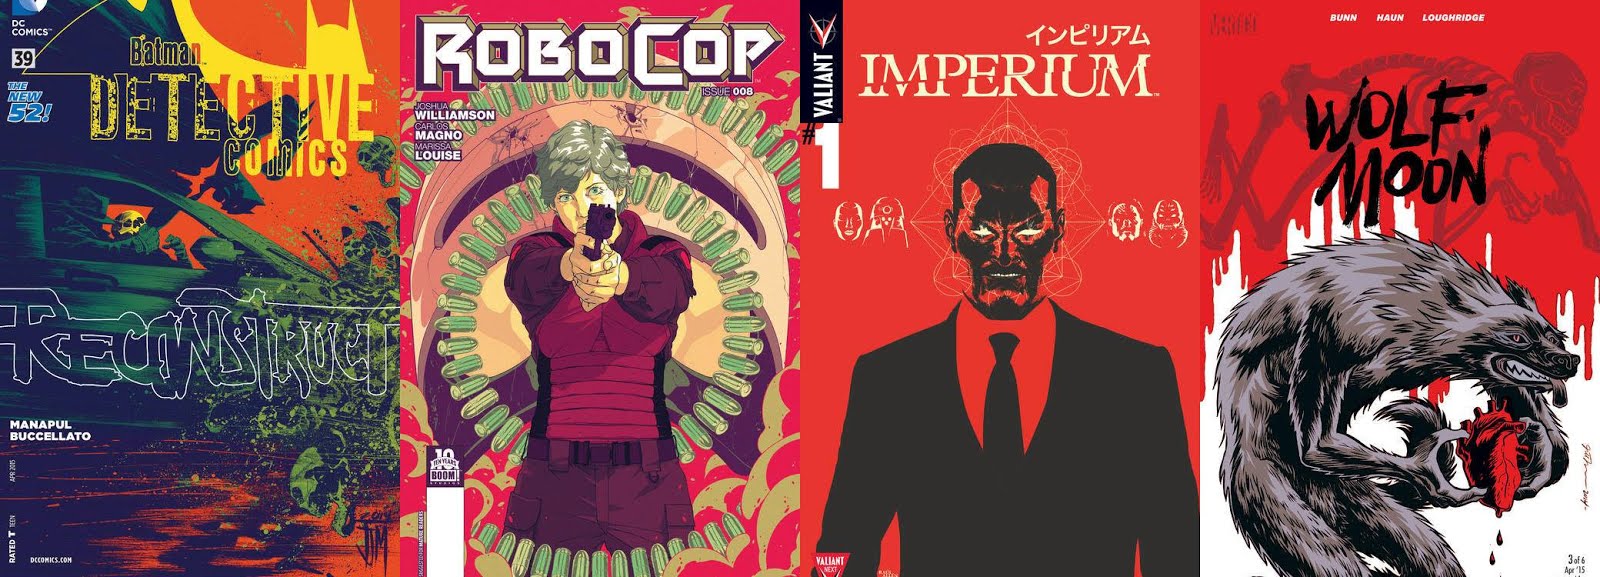 Empire-DCP-Minutemen-Scans |Comics CBR CBZ